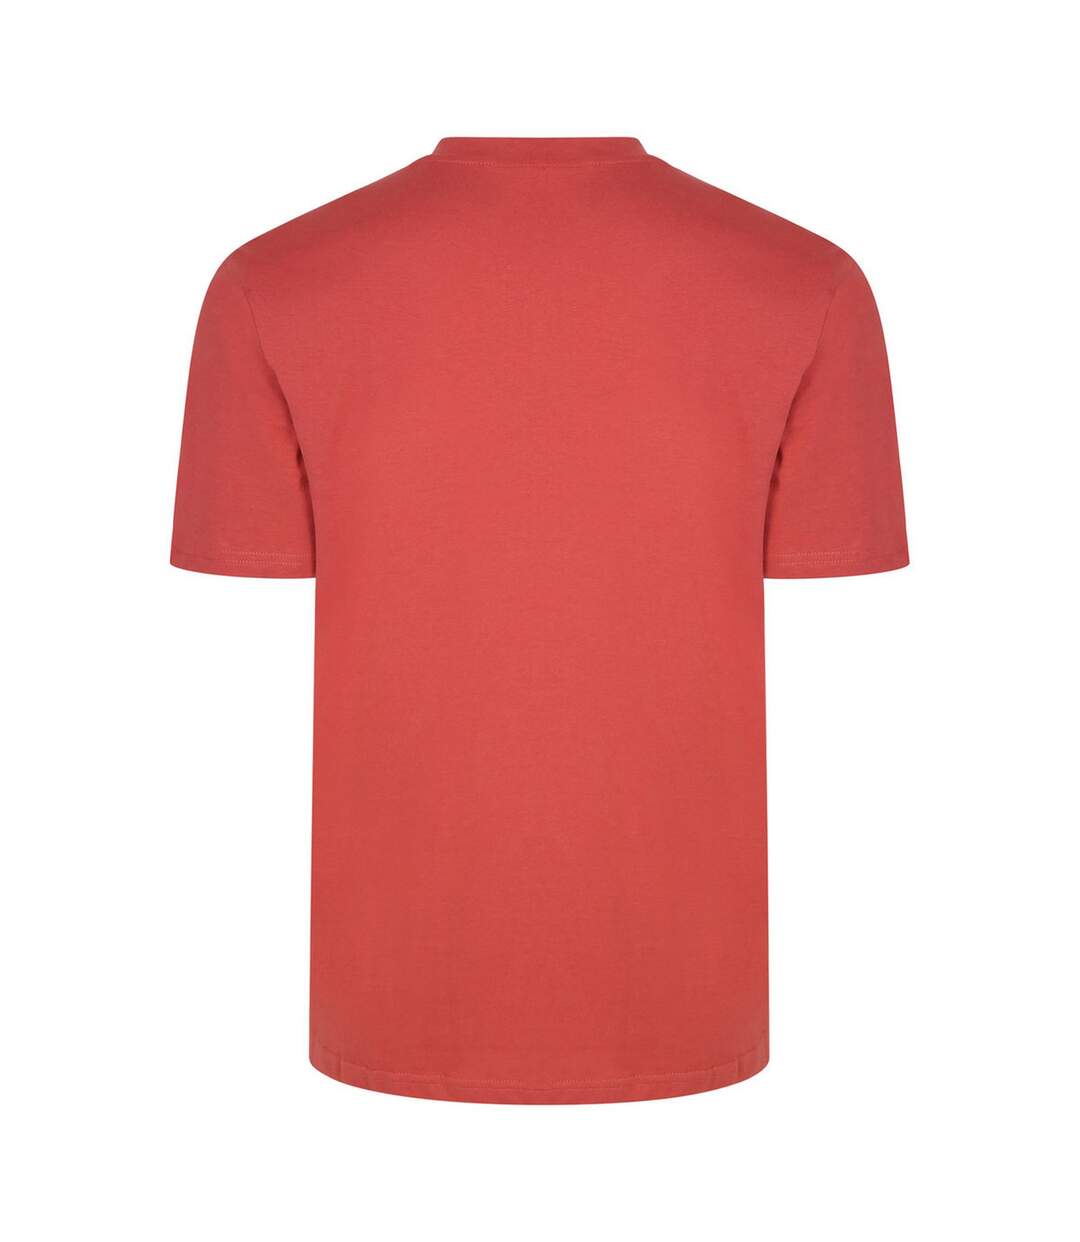 Umbro - T-shirt DIAMOND - Homme (Indigo / Rouge foncé) - UTUO874